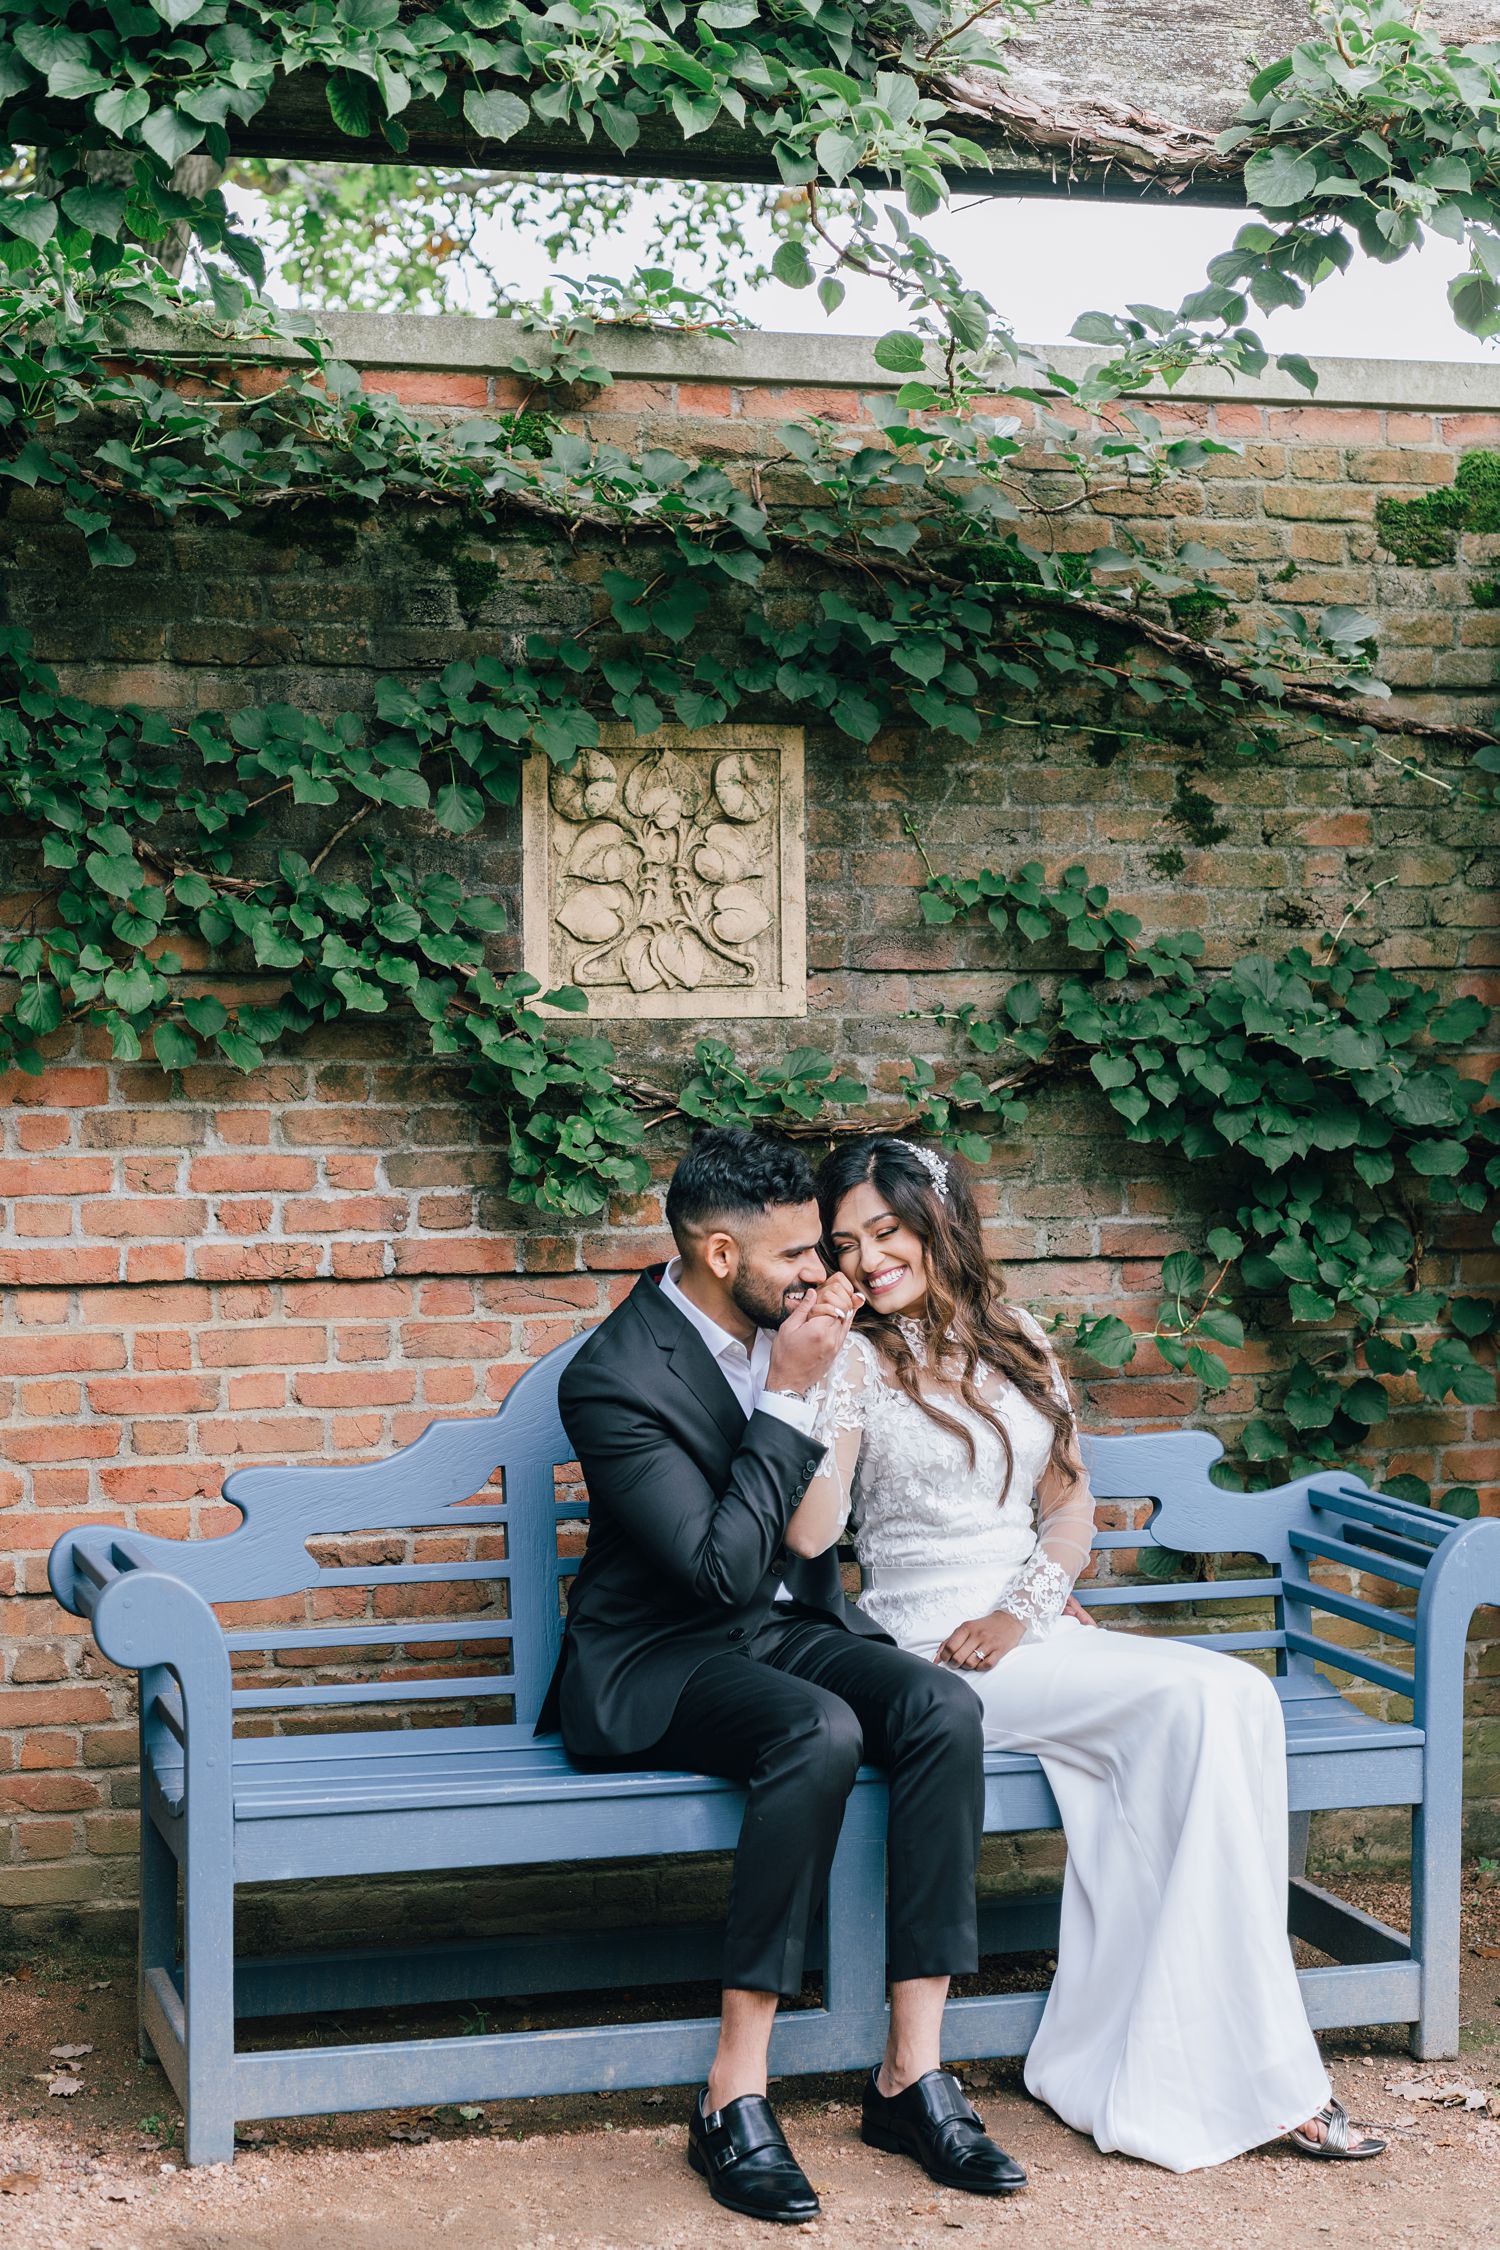 Wedding couple at Chicago Botanic Garden sitting in Walled English Garden